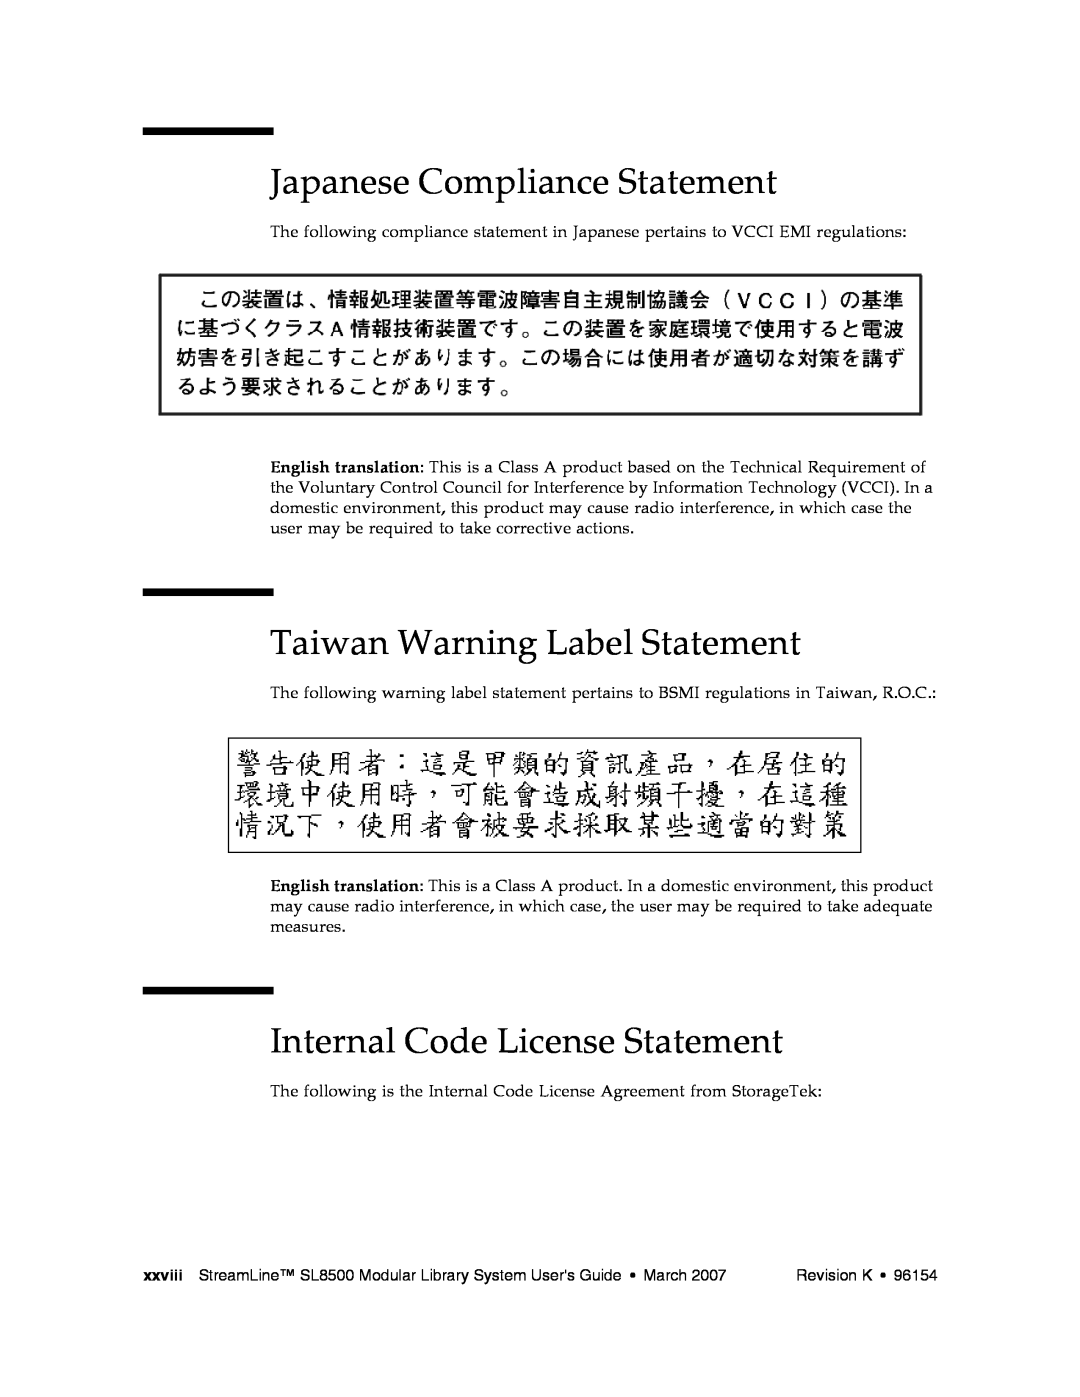 Sun Microsystems SL8500 Japanese Compliance Statement, Taiwan Warning Label Statement, Internal Code License Statement 